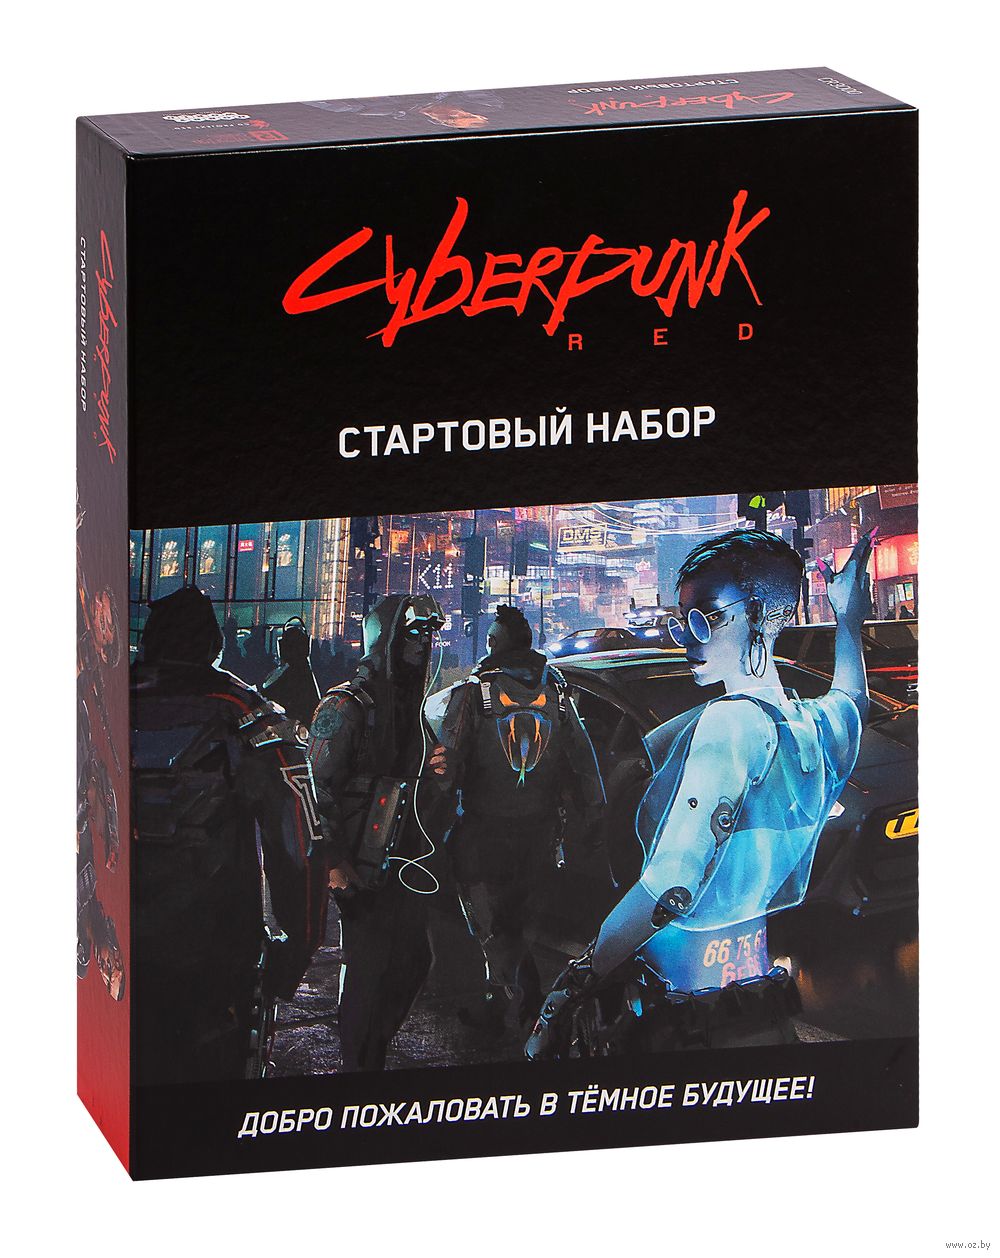 Hobby world cyberpunk red стартовый набор фото 18